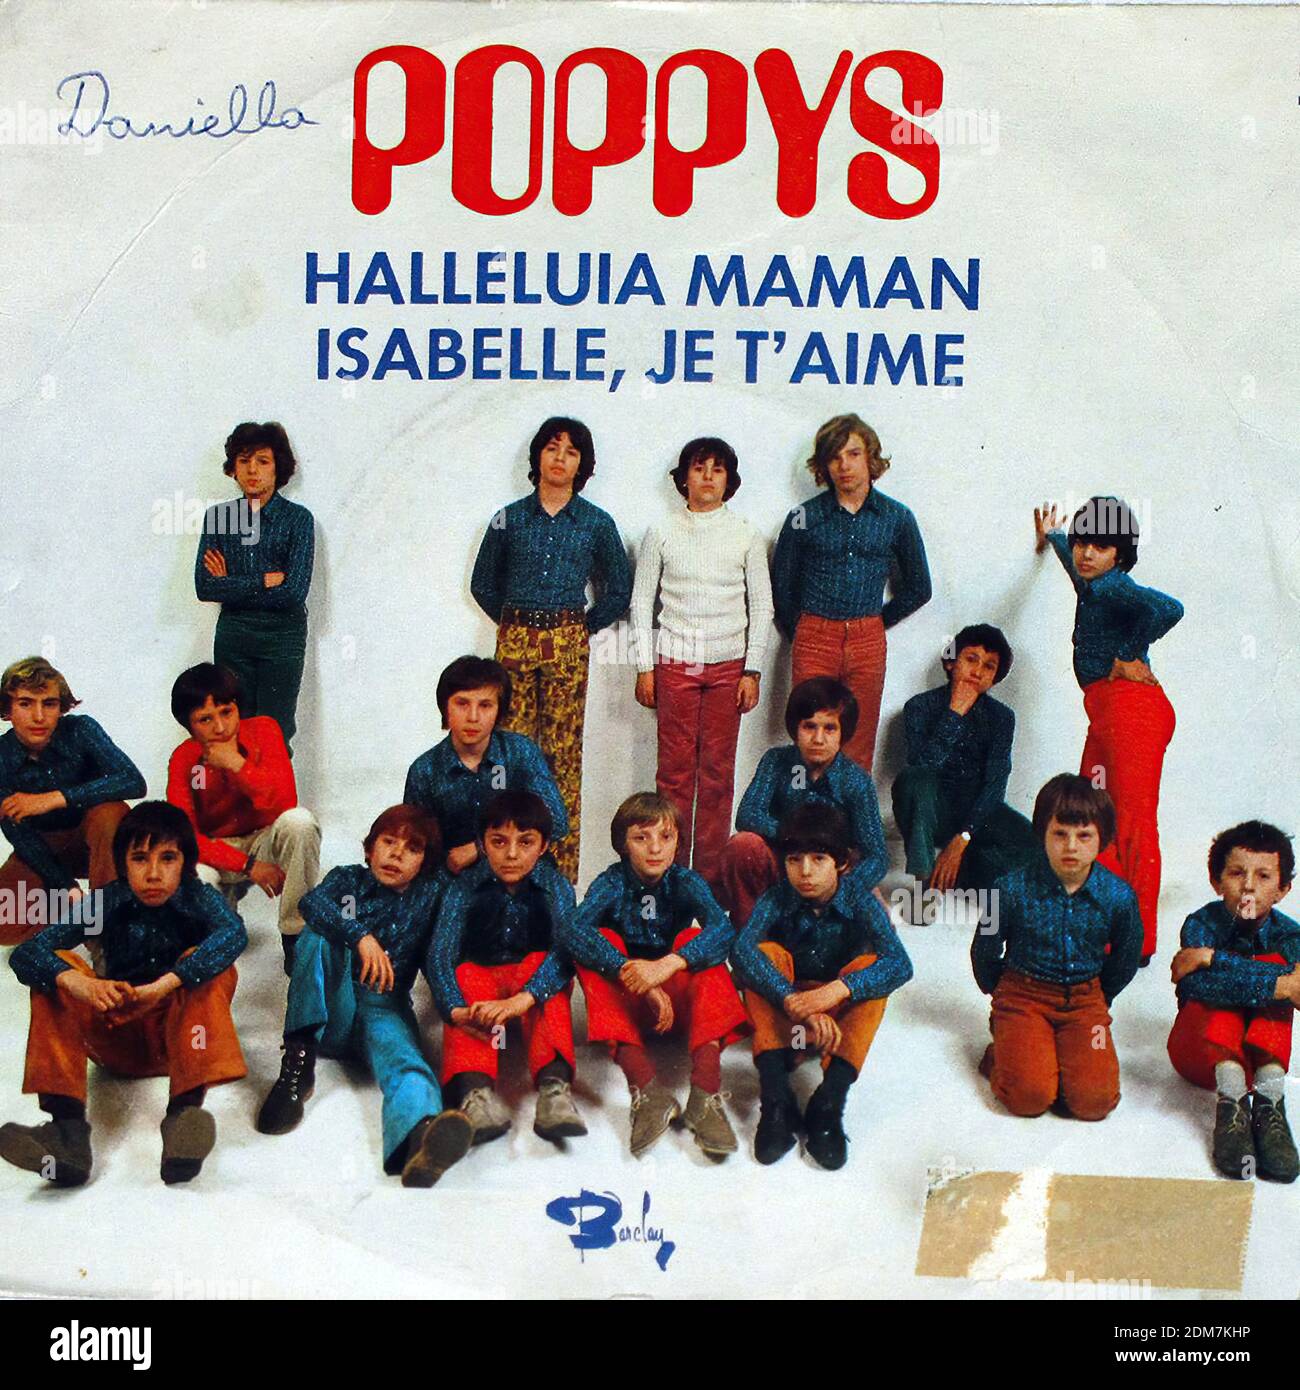 POPPYS HALLELUIA MAMAN   ISABELLE, JE T'AIME 7  PS Single - Vintage Vinyl Record Cover Stock Photo